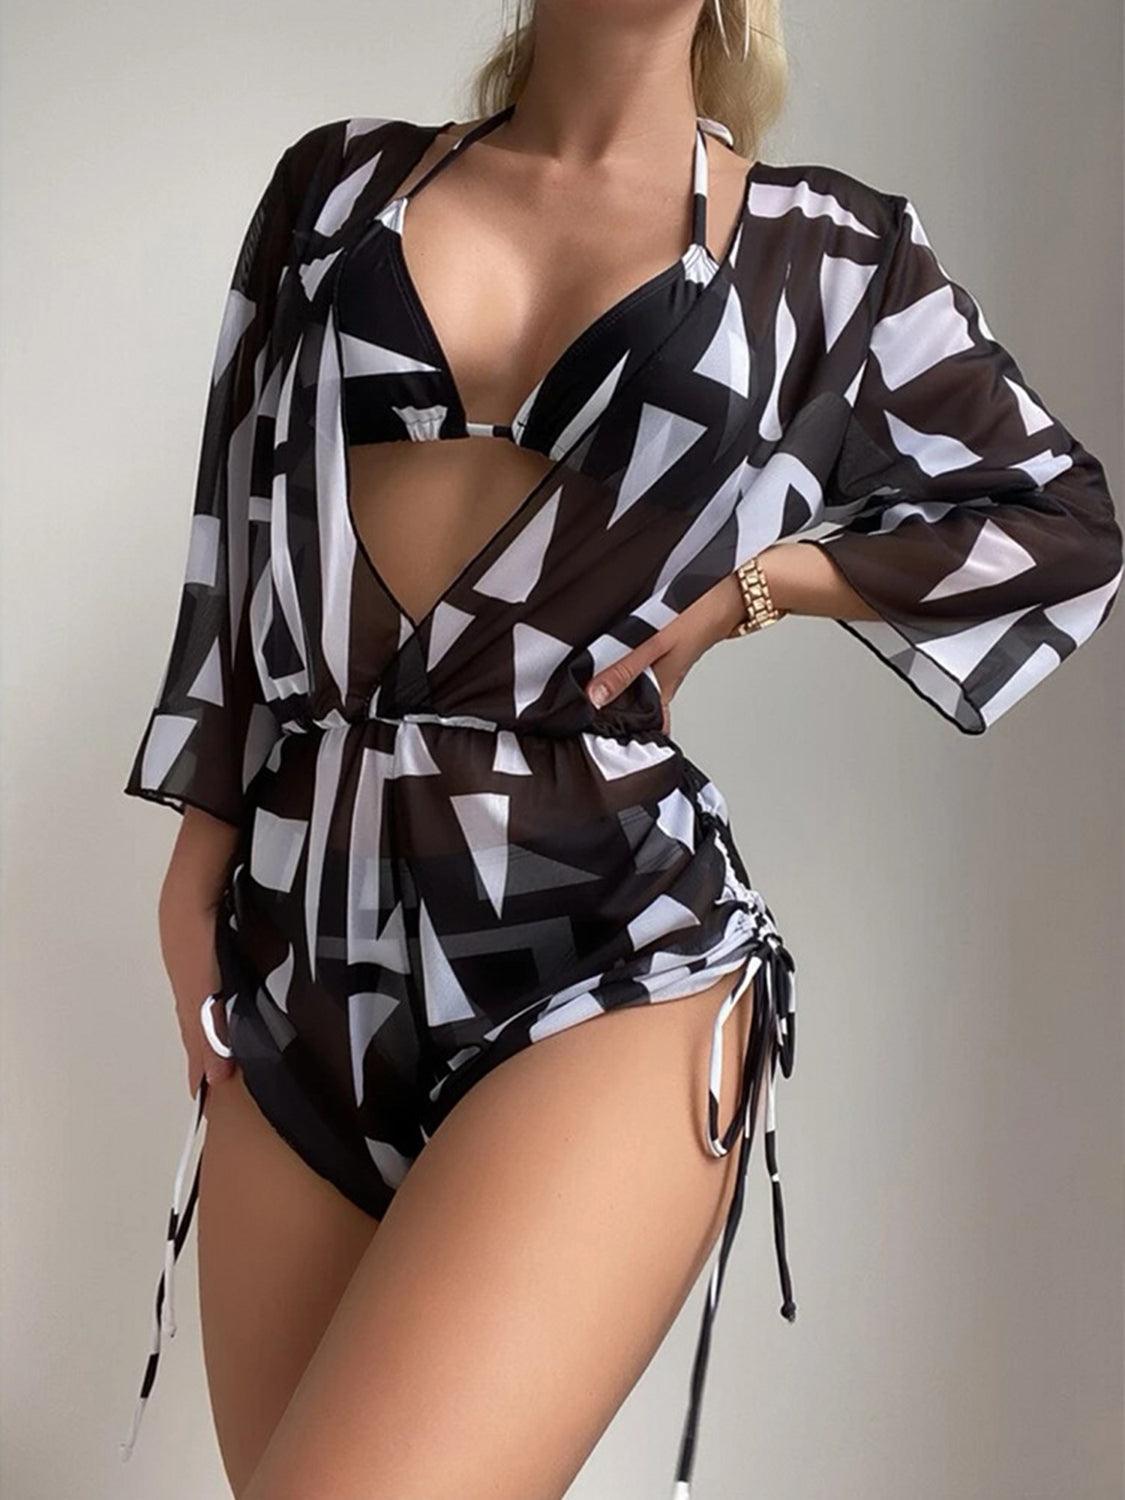 Bona Fide Fashion - Printed Halter Neck Bikini and Cover Up Swim Set - Women Fashion - Bona Fide Fashion